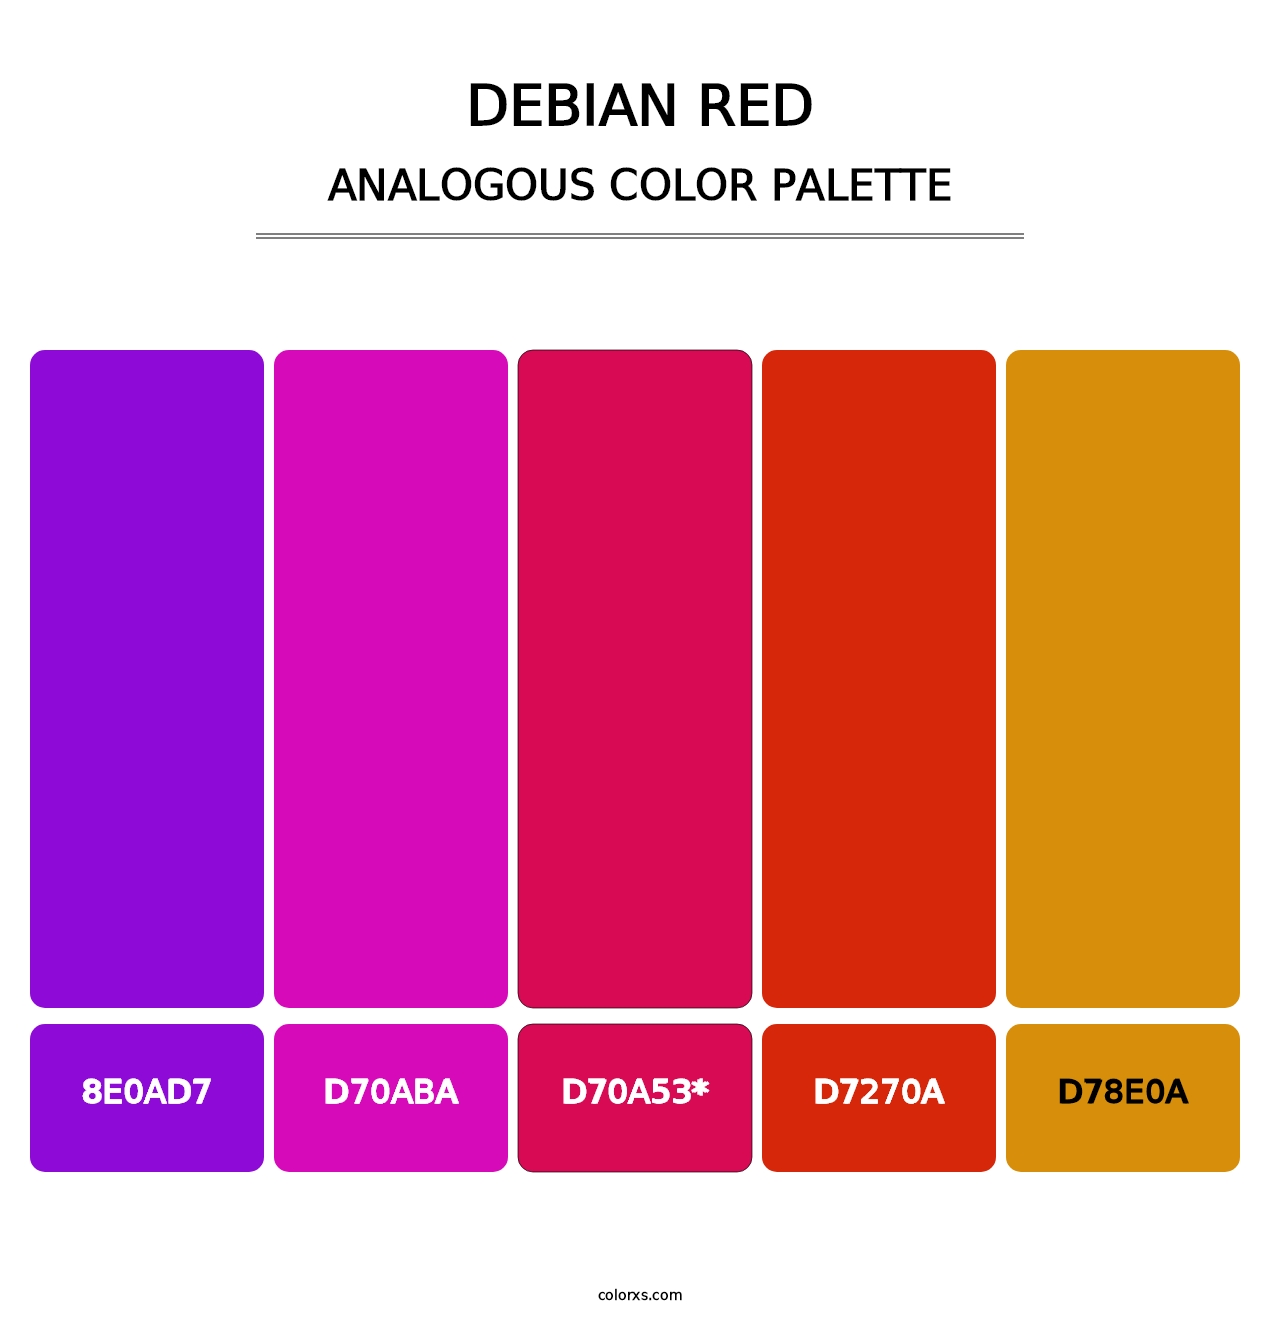 Debian red - Analogous Color Palette